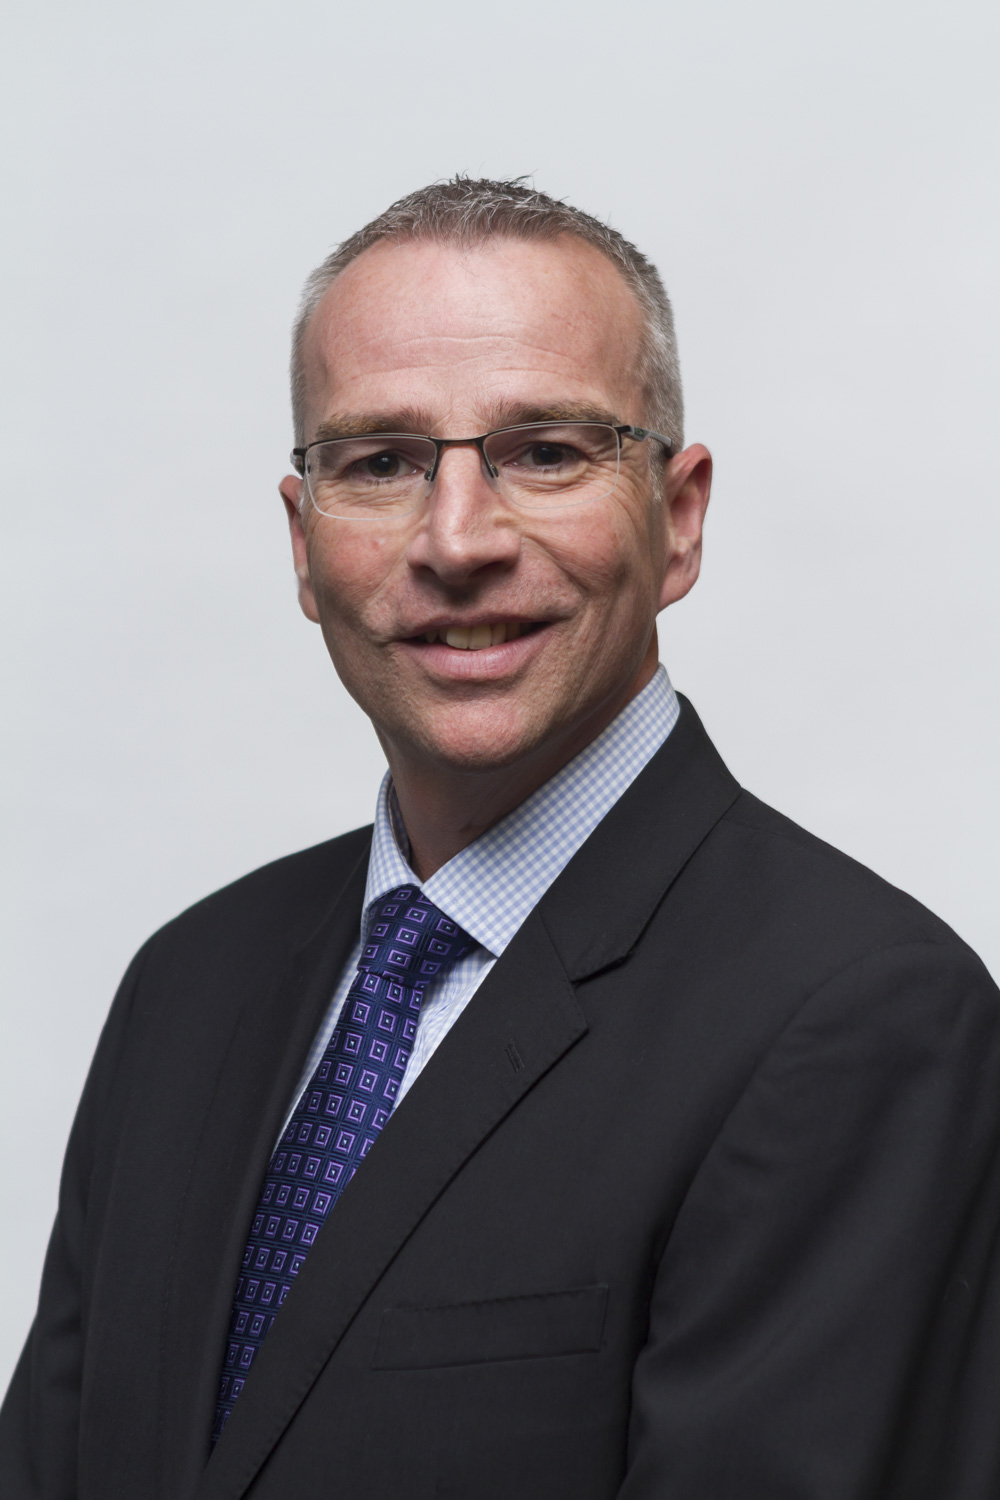 Steve Burd, Vice President Sales for DHL Express Sub-Saharan Africa